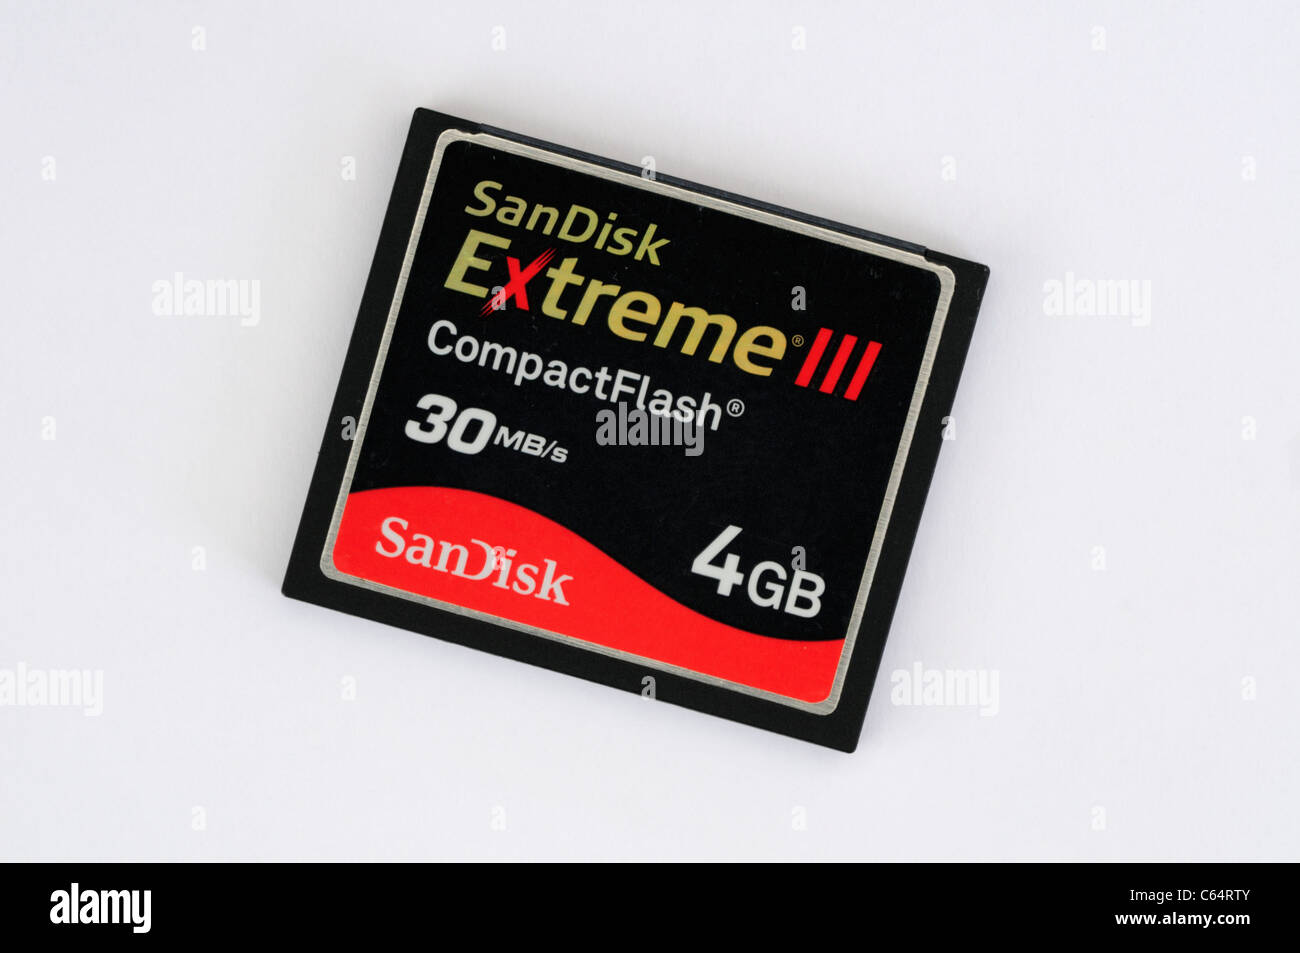 Sandisk Extreme III Compact Flash CF Memory Card Stock Photo